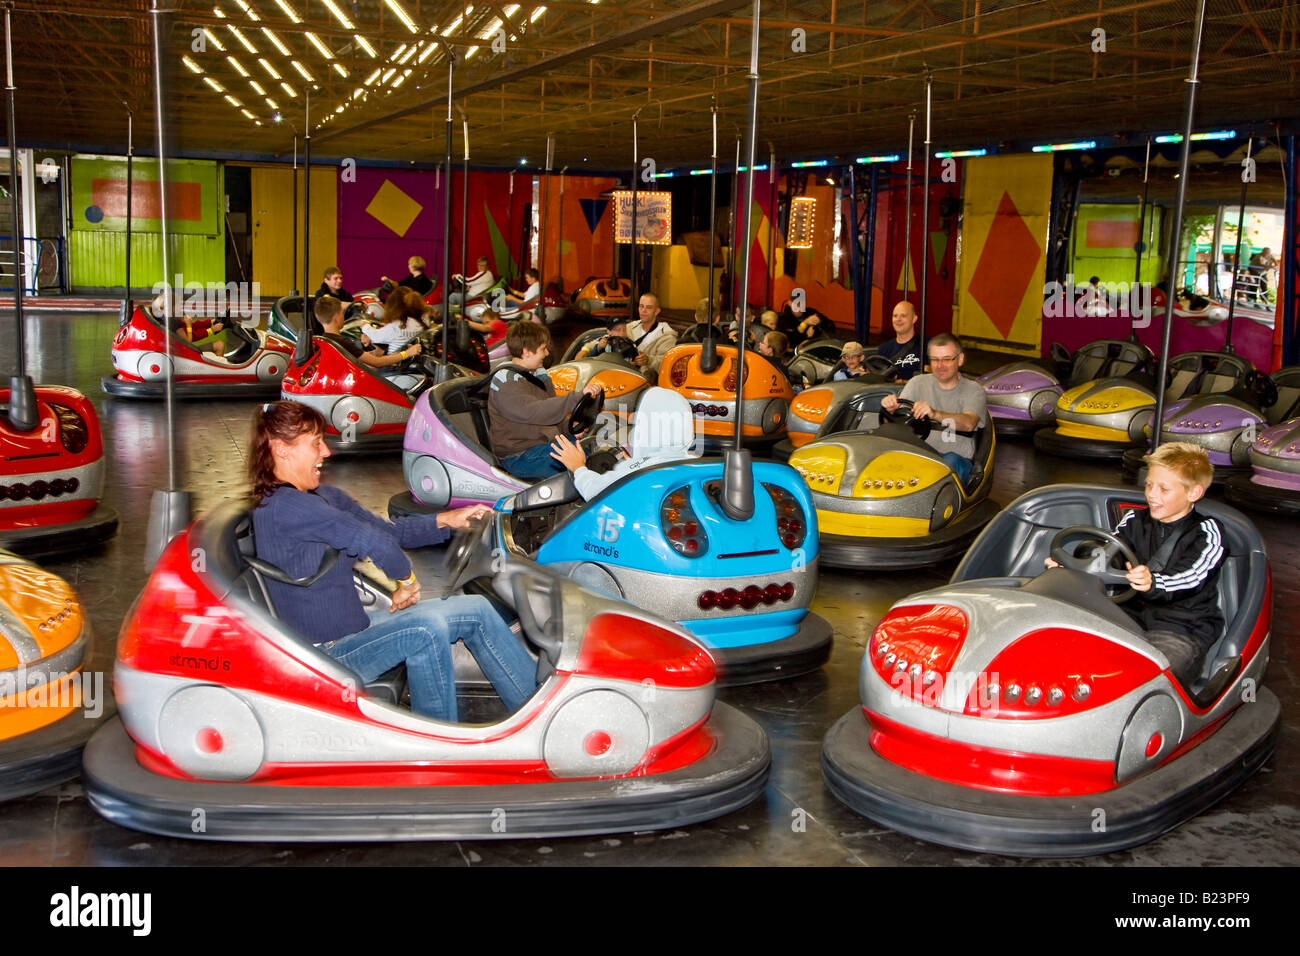 Driving bumper cars in Bakken amusement park Stock Photo